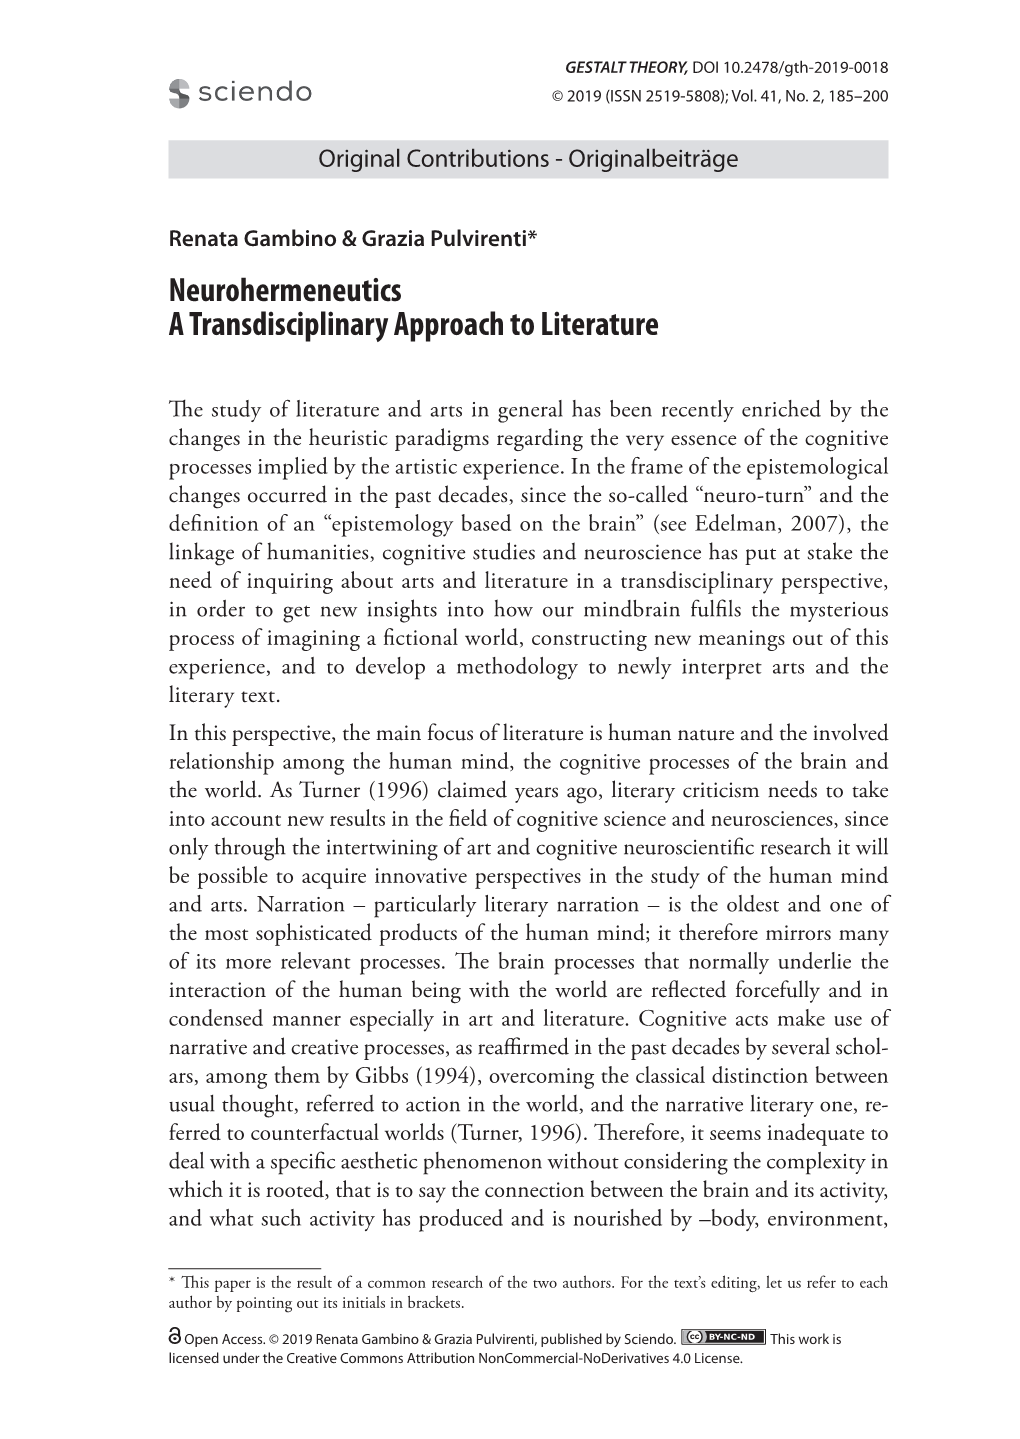 Neurohermeneutics a Transdisciplinary Approach to Literature